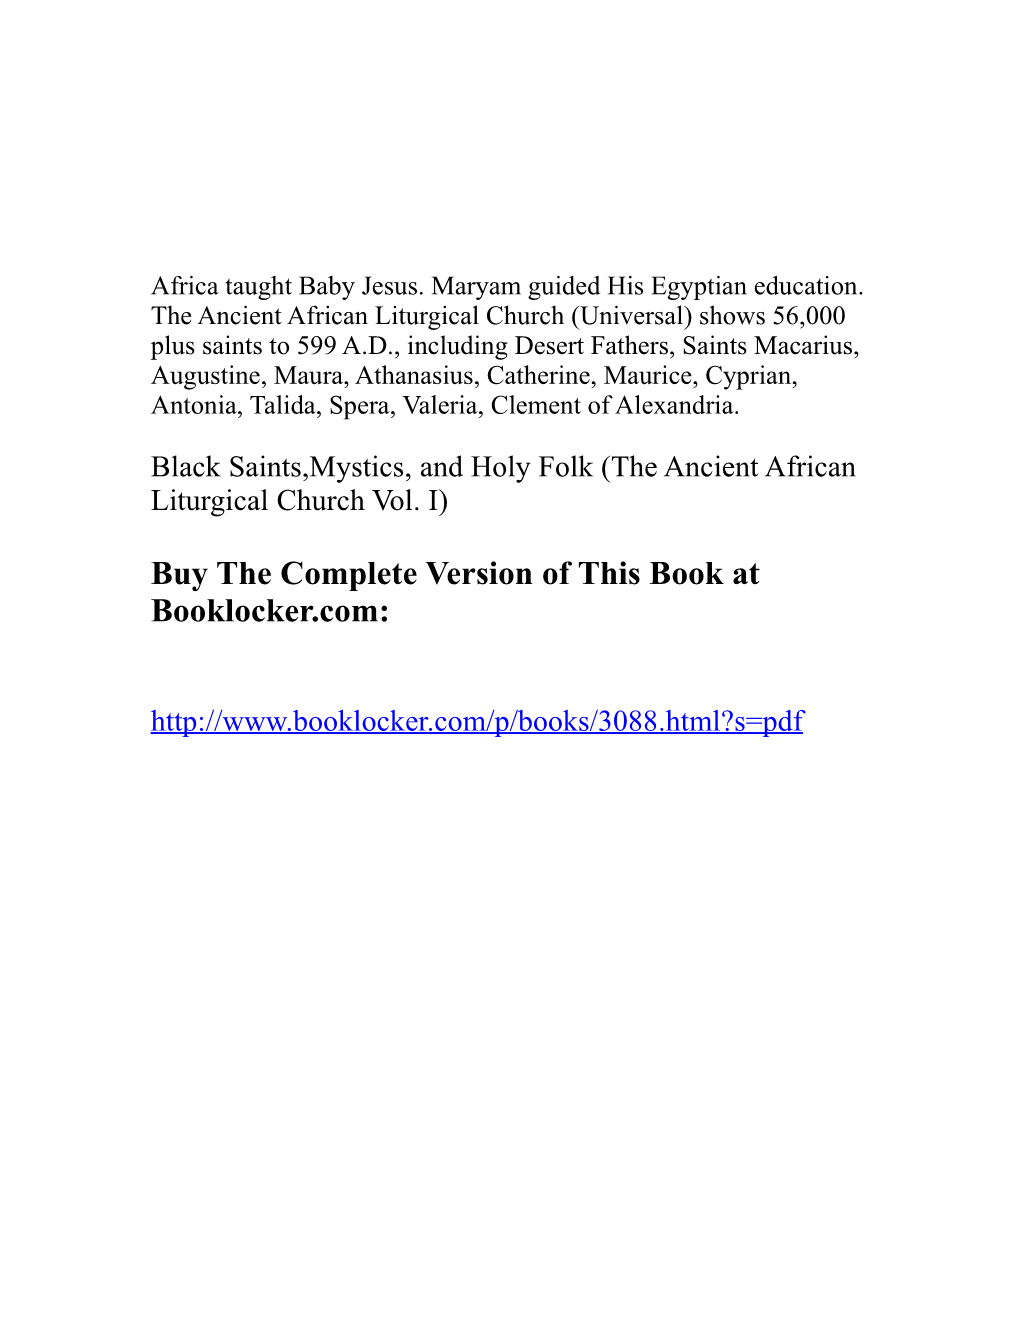 Black Saints,Mystics, and Holy Folk (The Ancient African Liturgical Church Vol